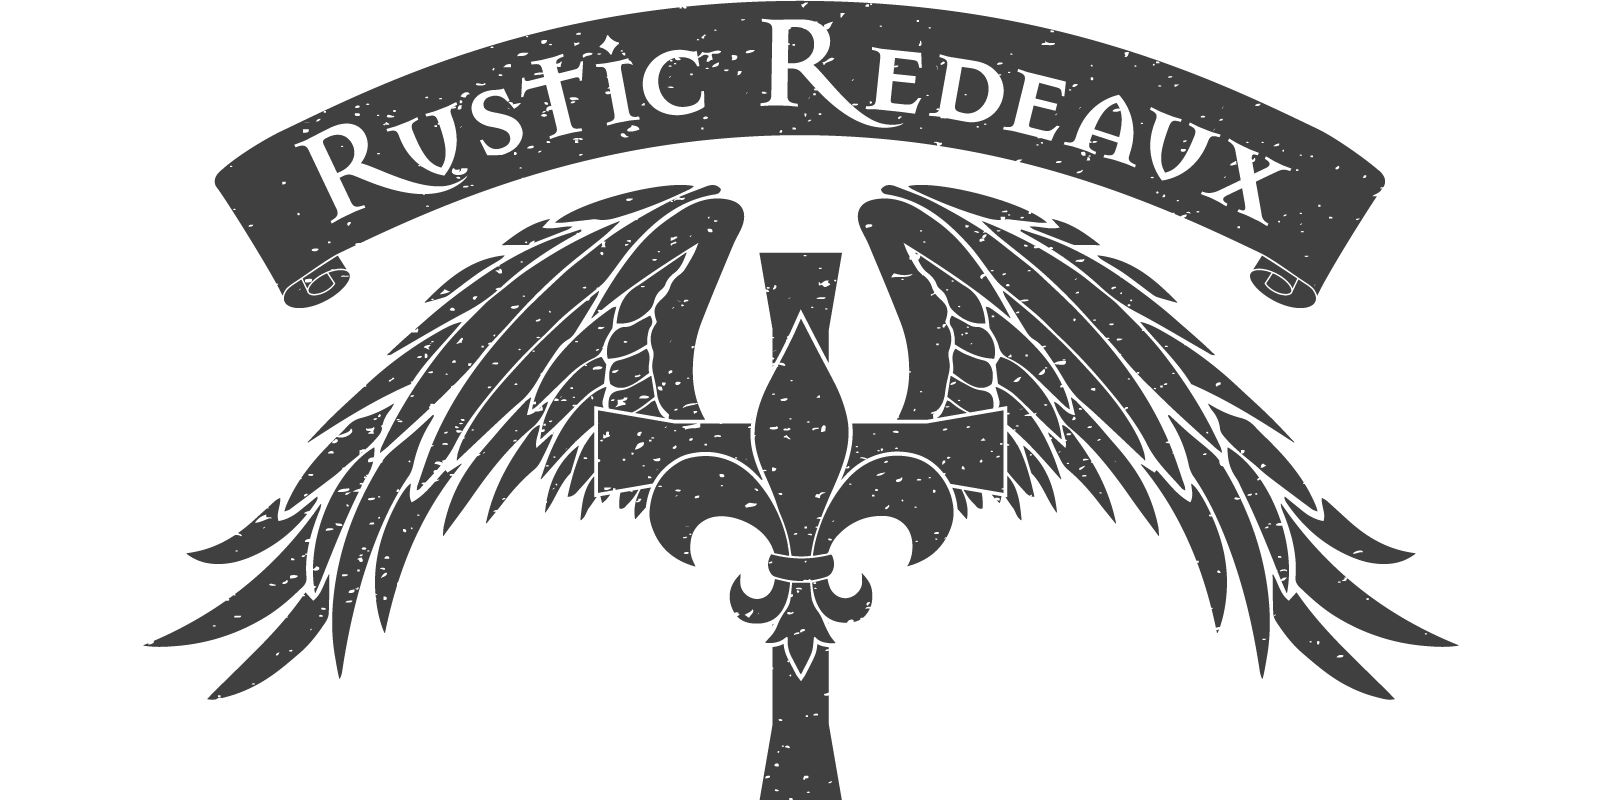 Rustic Redeaux